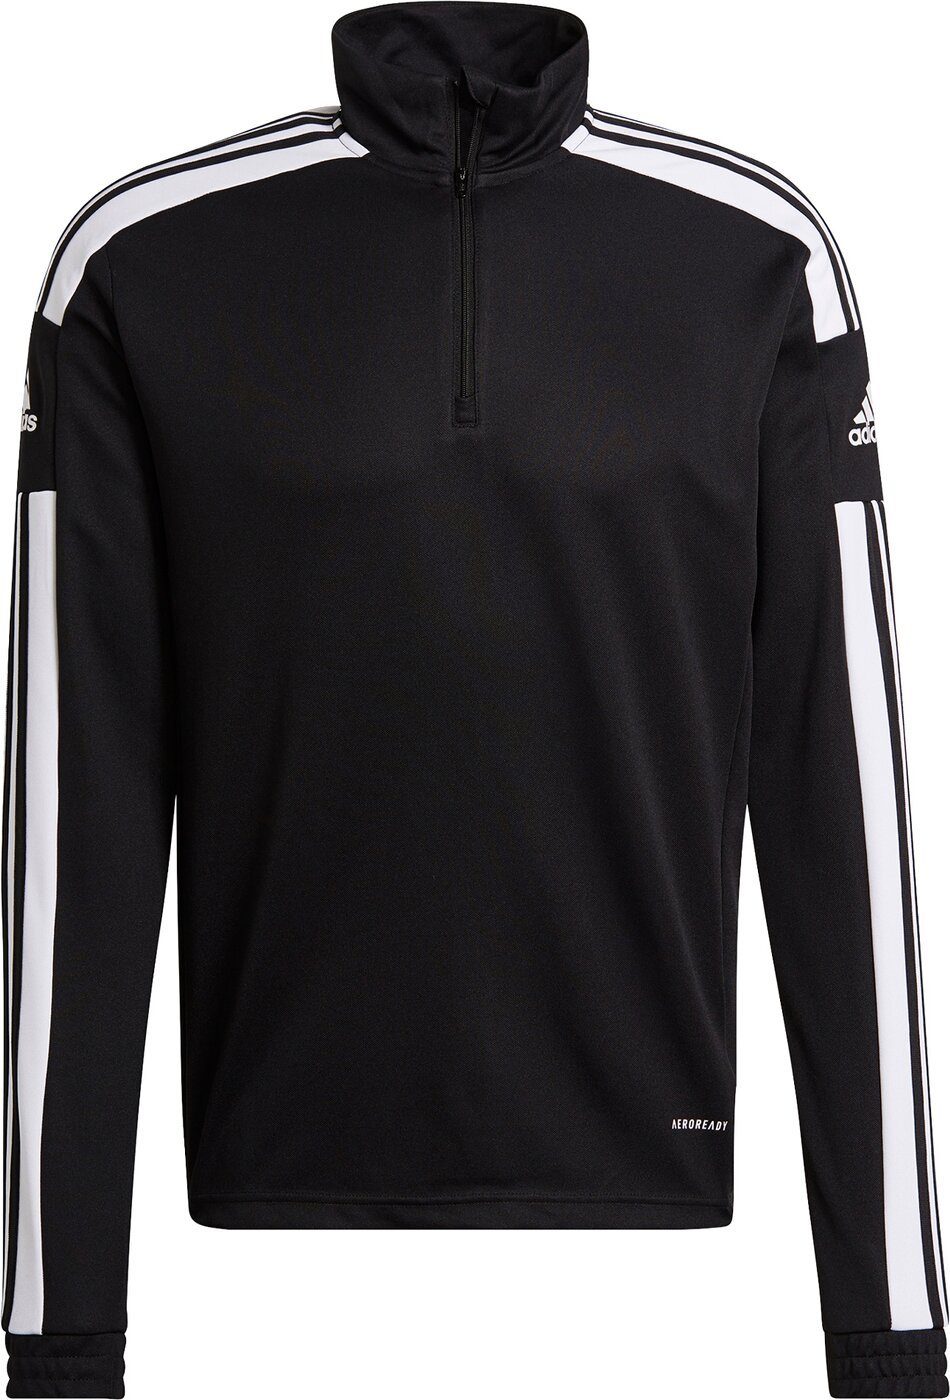 adidas Performance adidas Sportswear Trainingsshirt SQ21 TR TOP BLACK/WHITE schwarzweiss